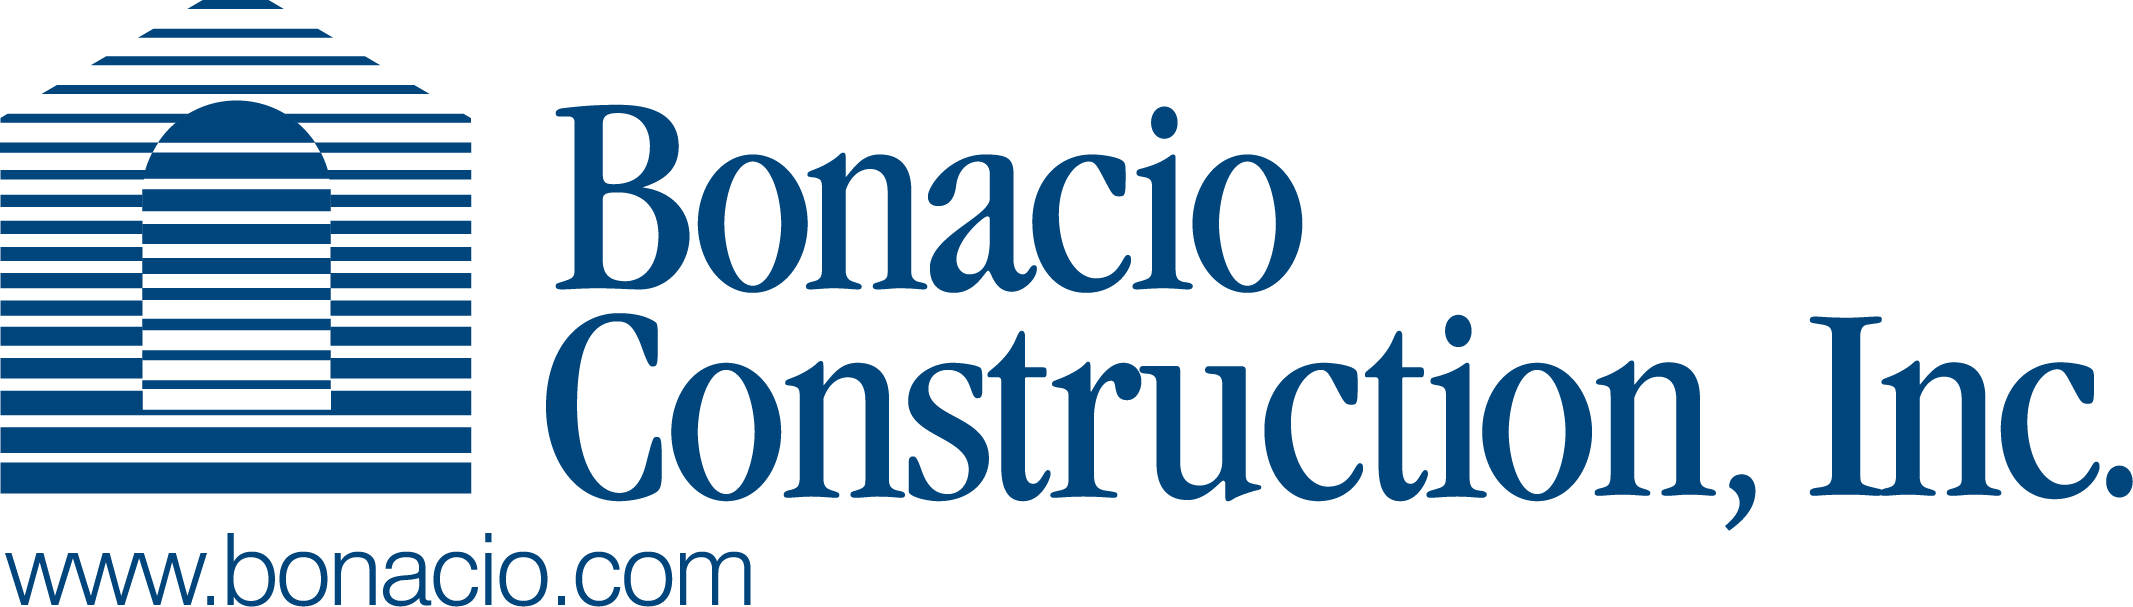 BONACIO CONSTRUCTION, INC. logo